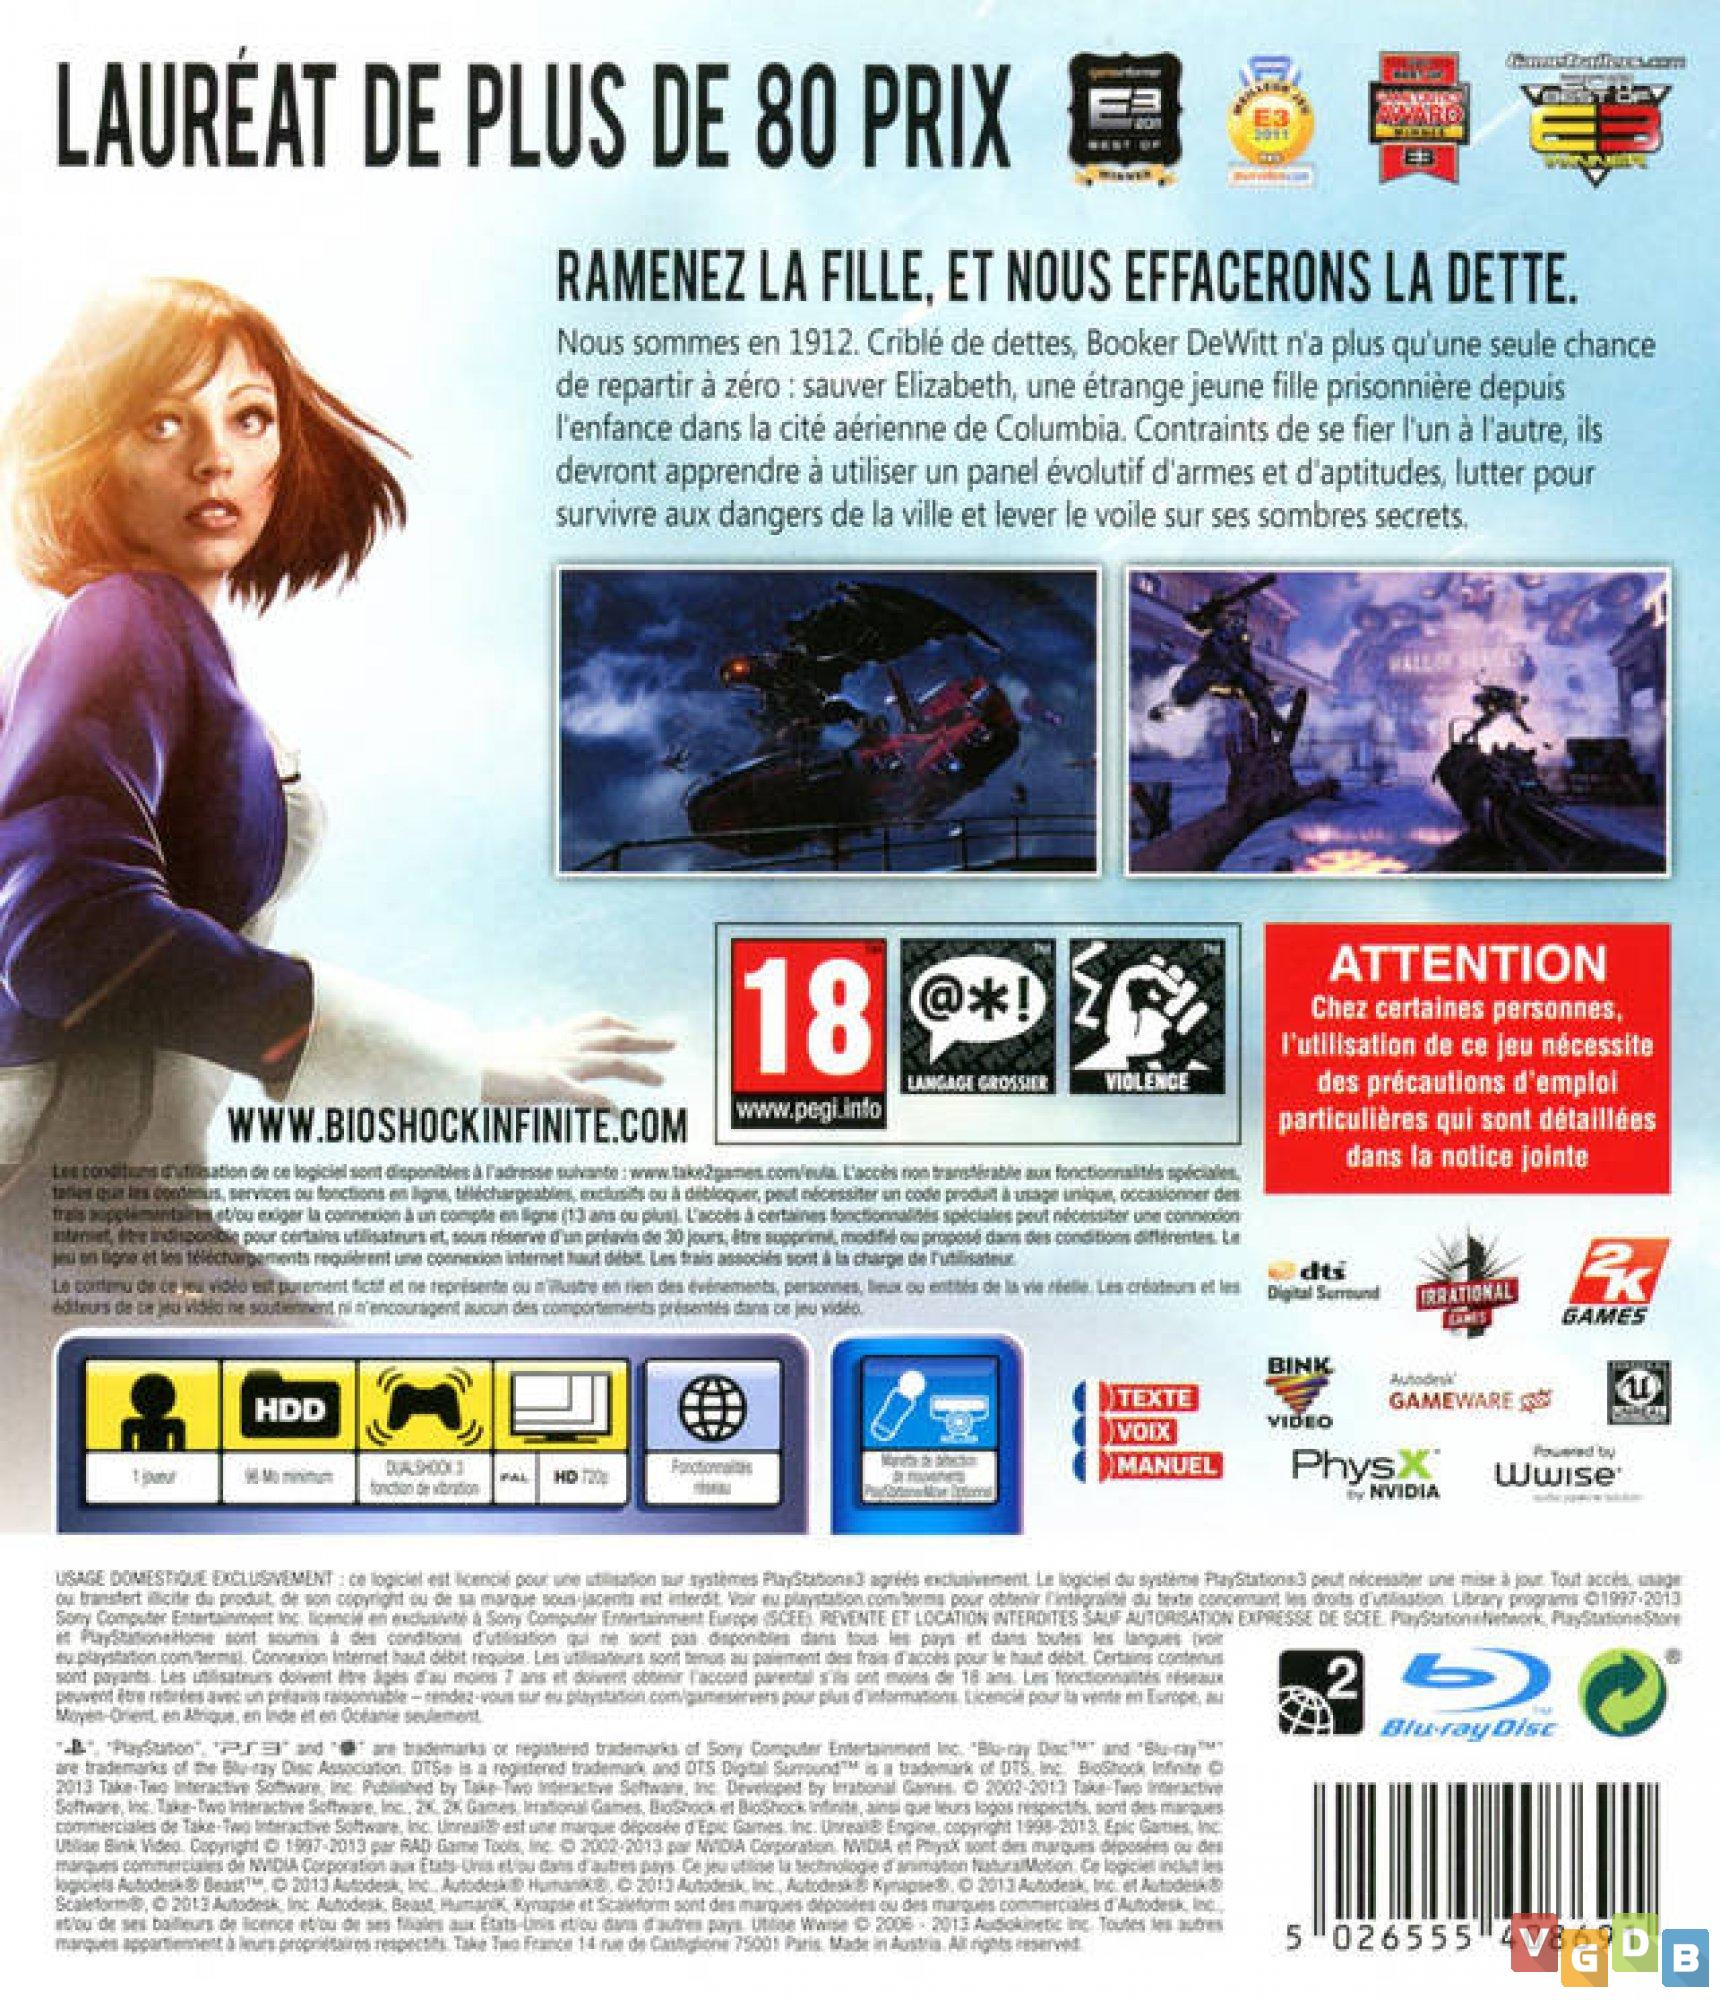 Jogo Bioshock Infinite - PS3 - MeuGameUsado